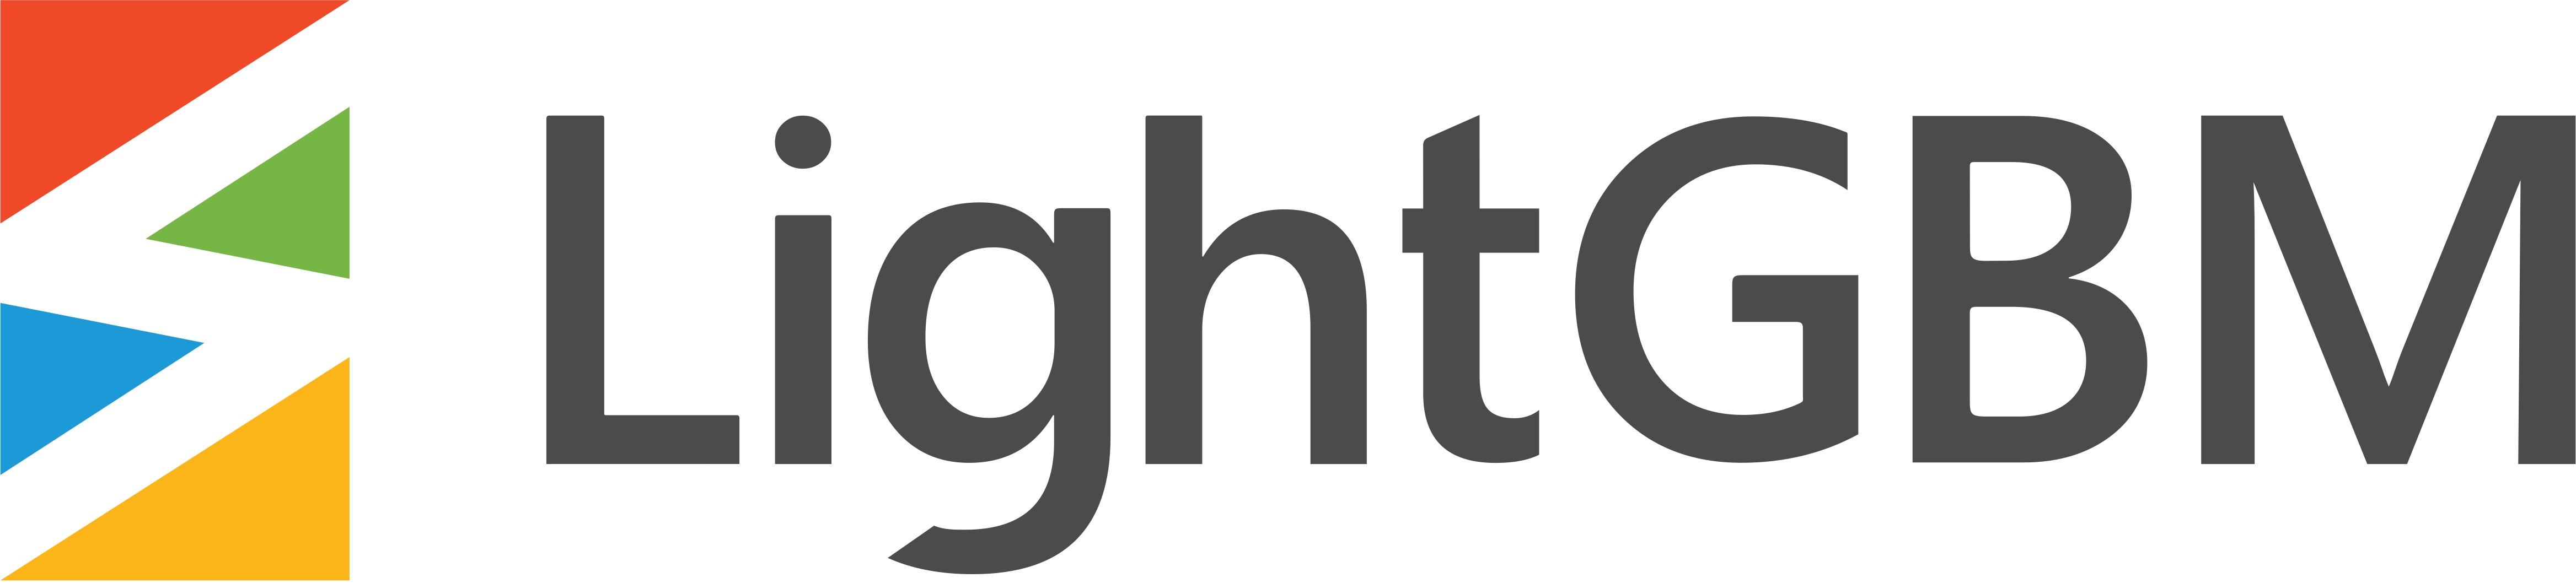 lightgbm_logo.png